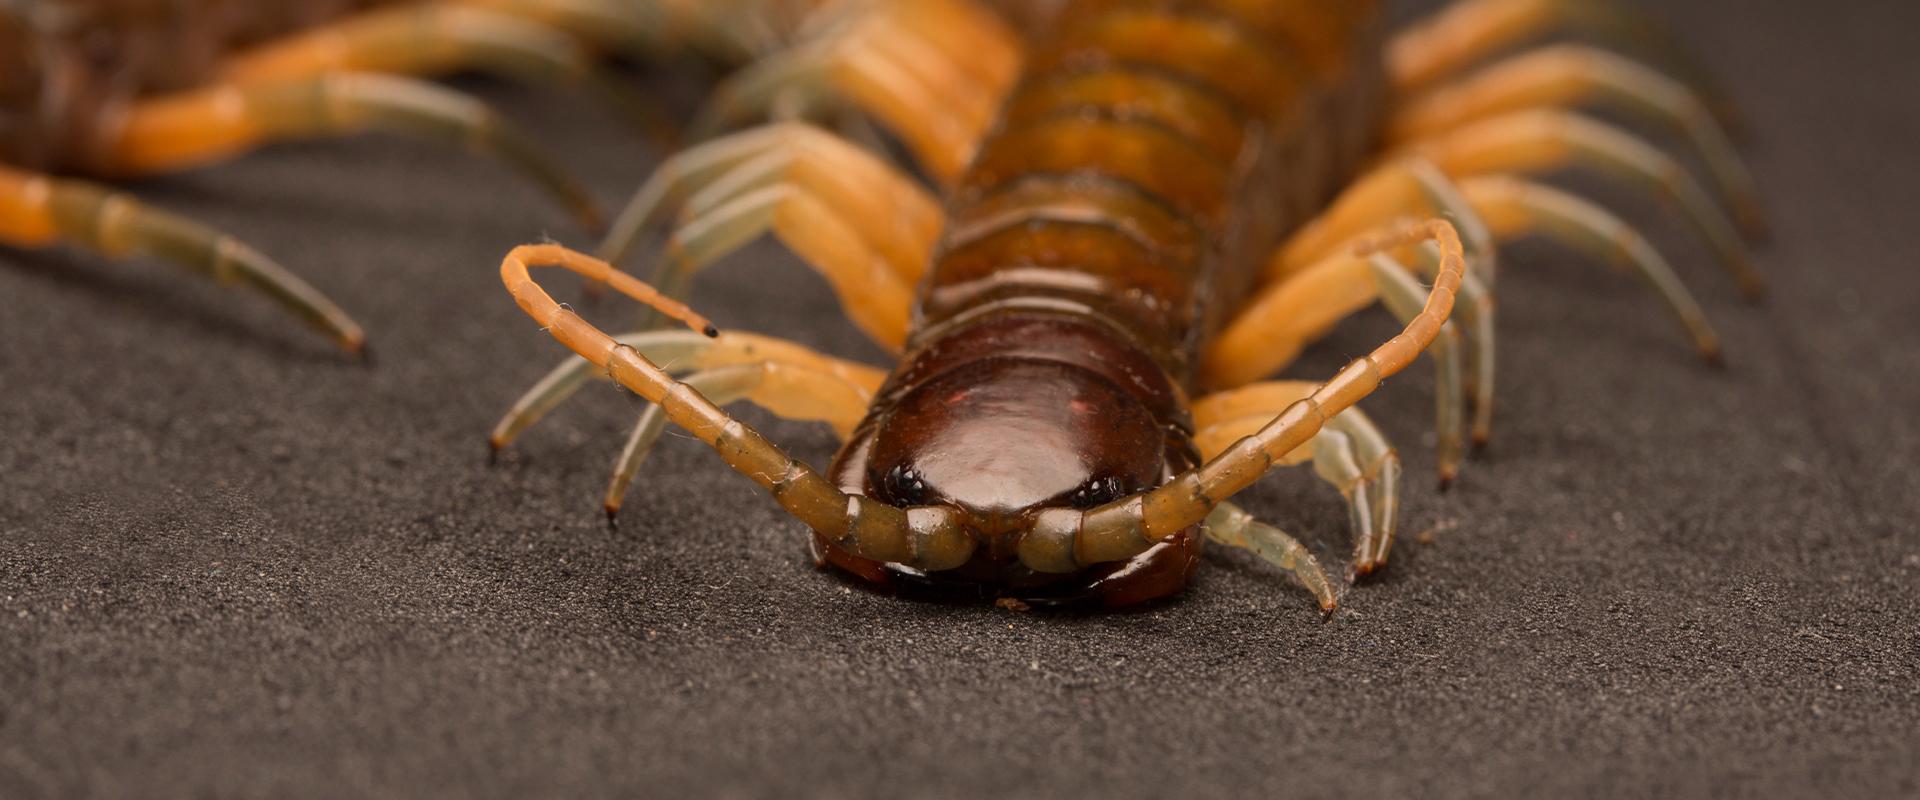 a centipede on gravel